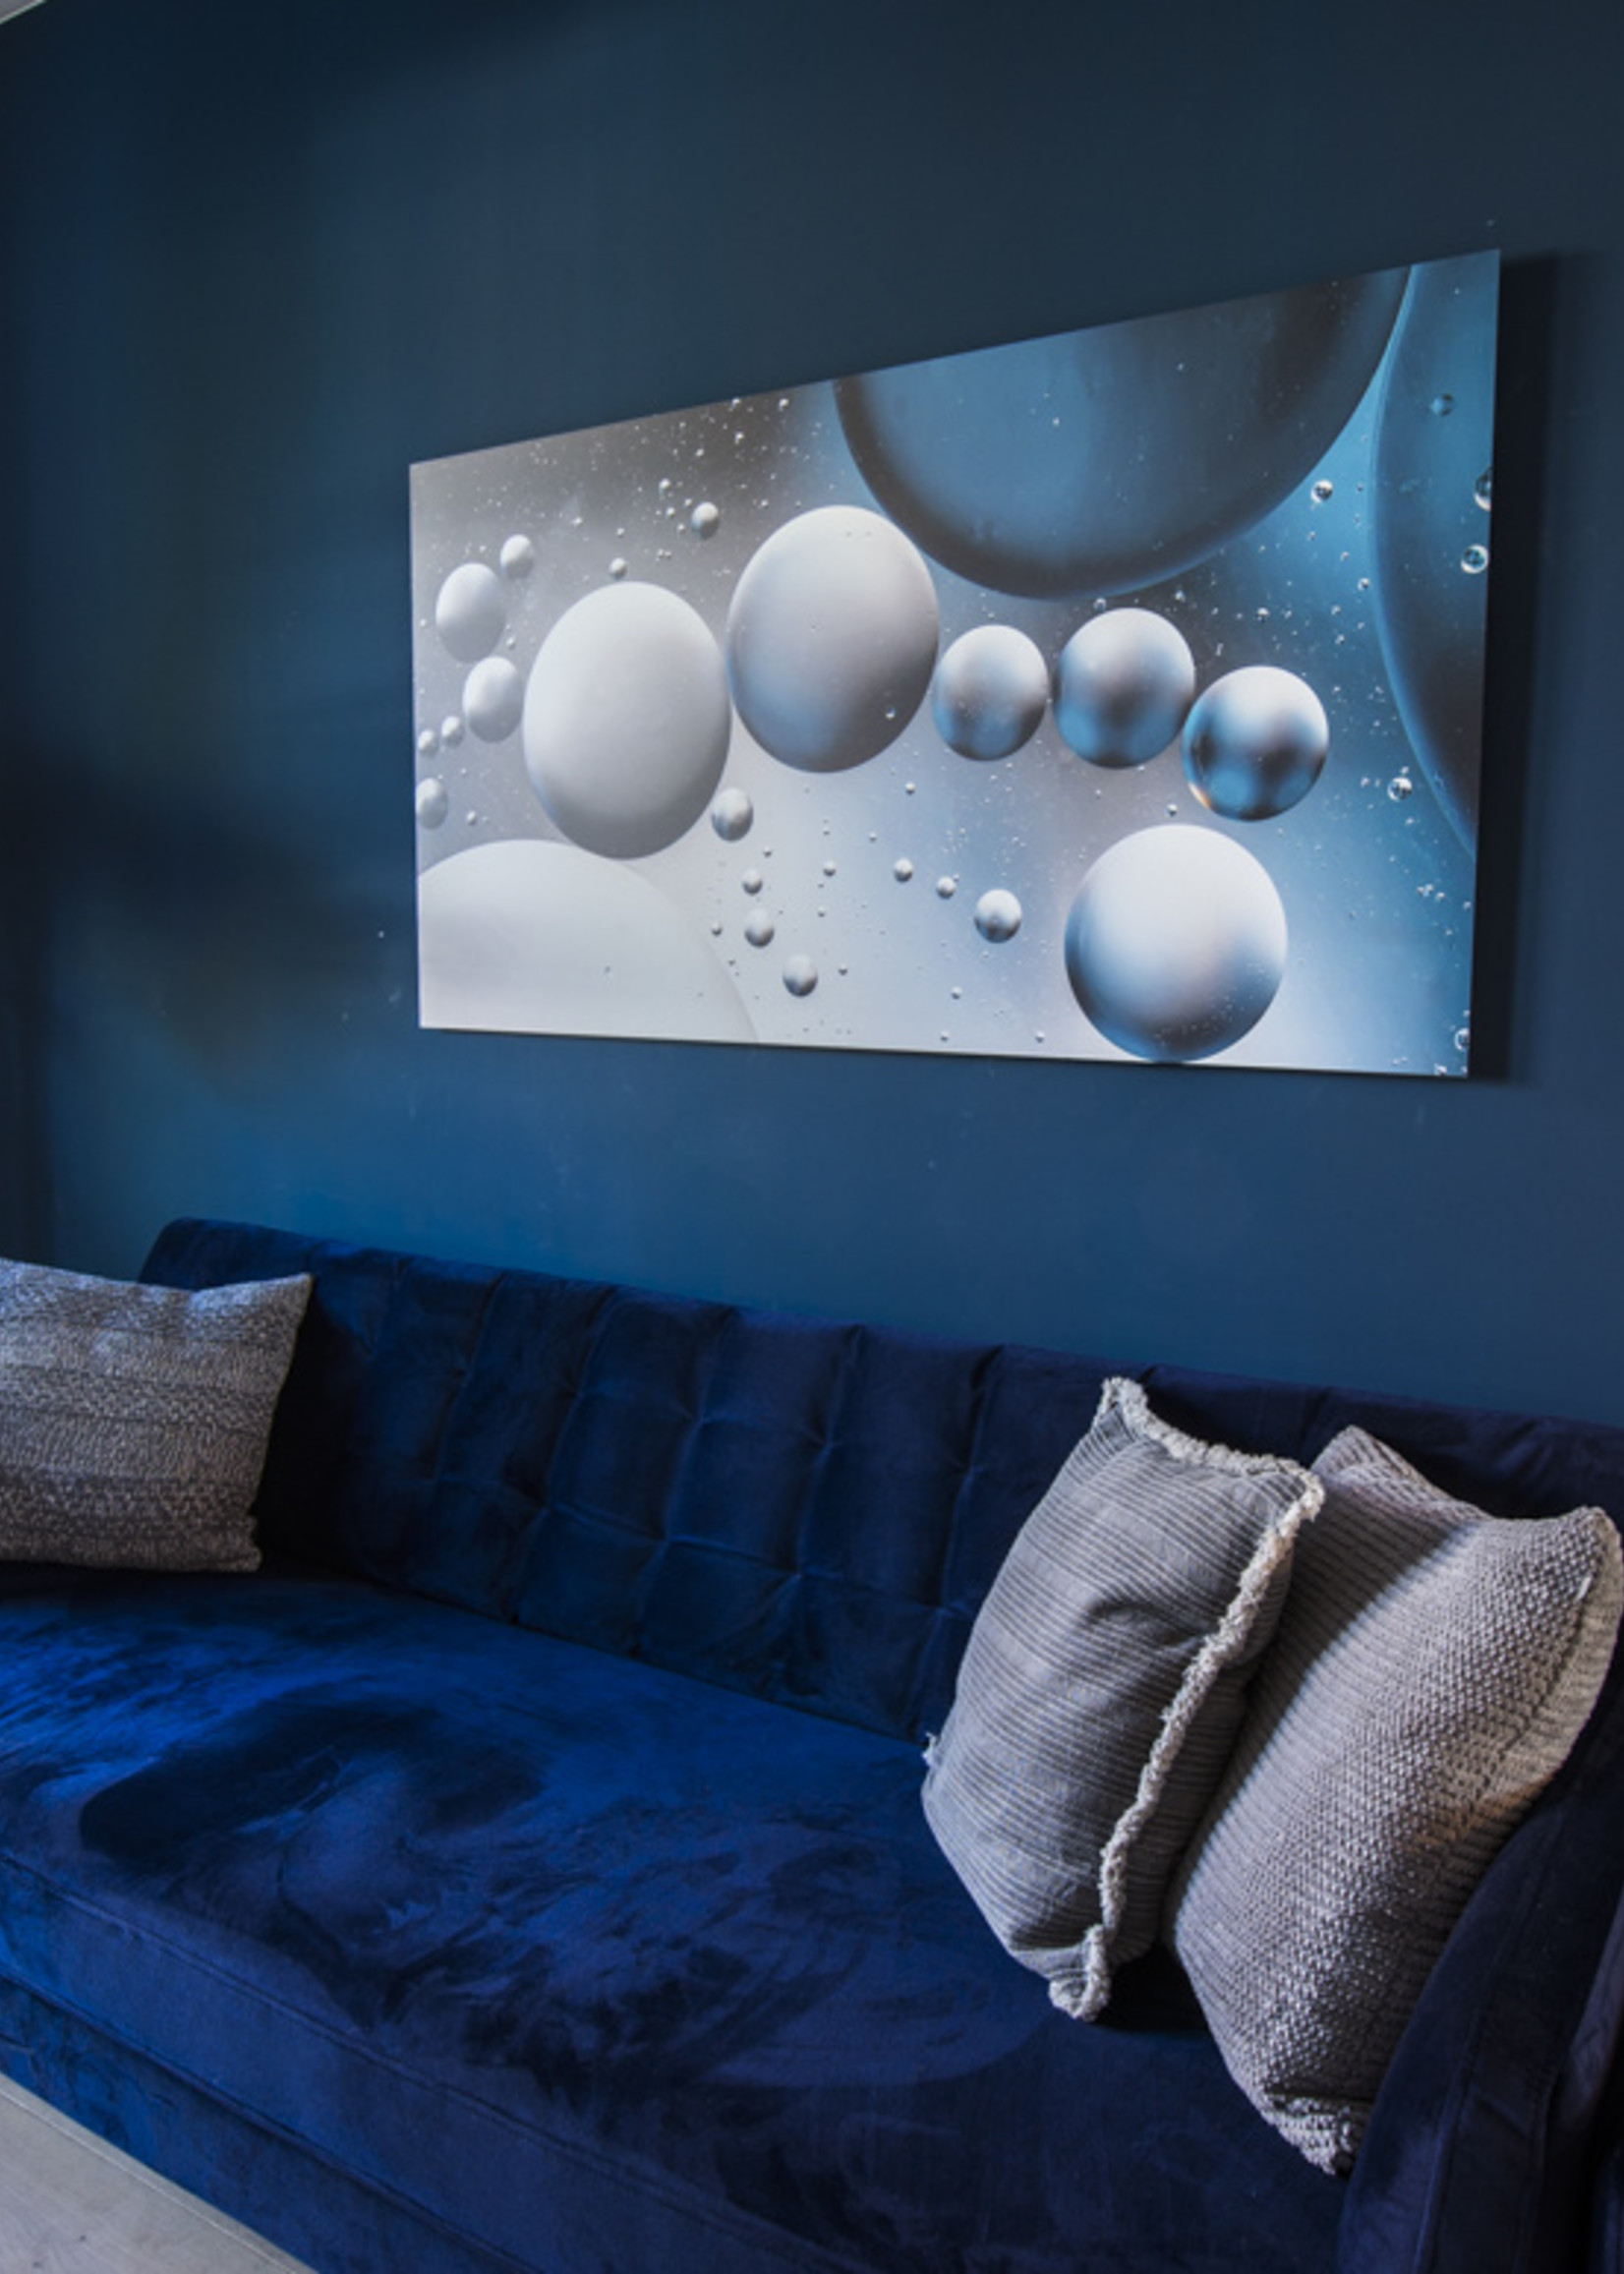 Frans van Steijn Wall photo "Blue Windows" Aluminum on Dibond 120 cm